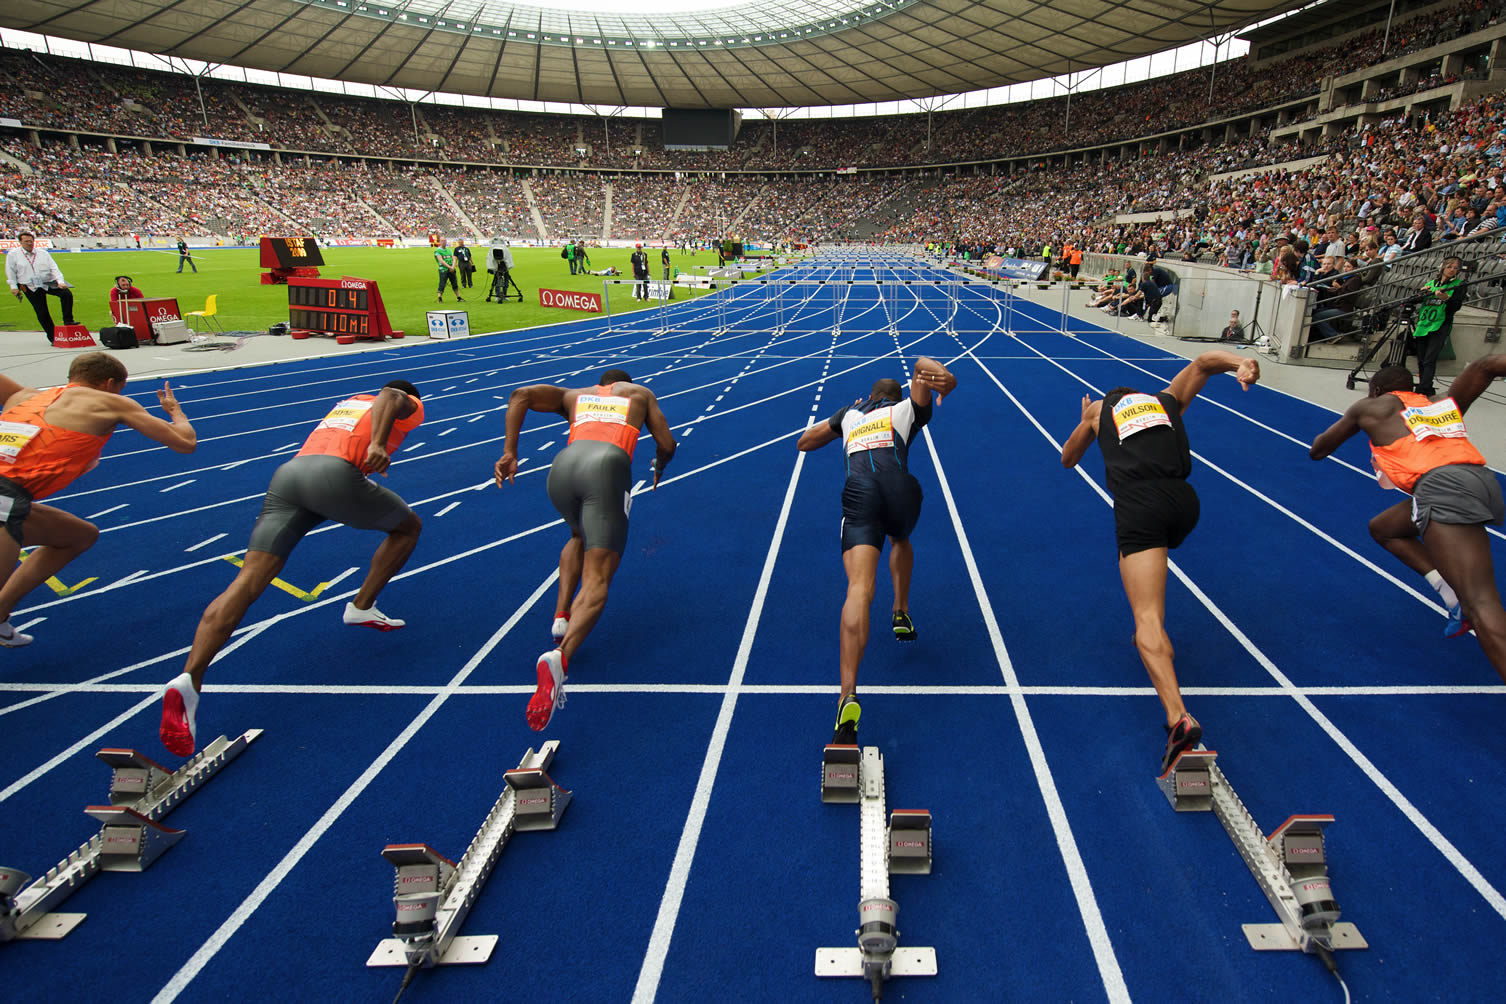 European Athletics Champioships Munich 2022